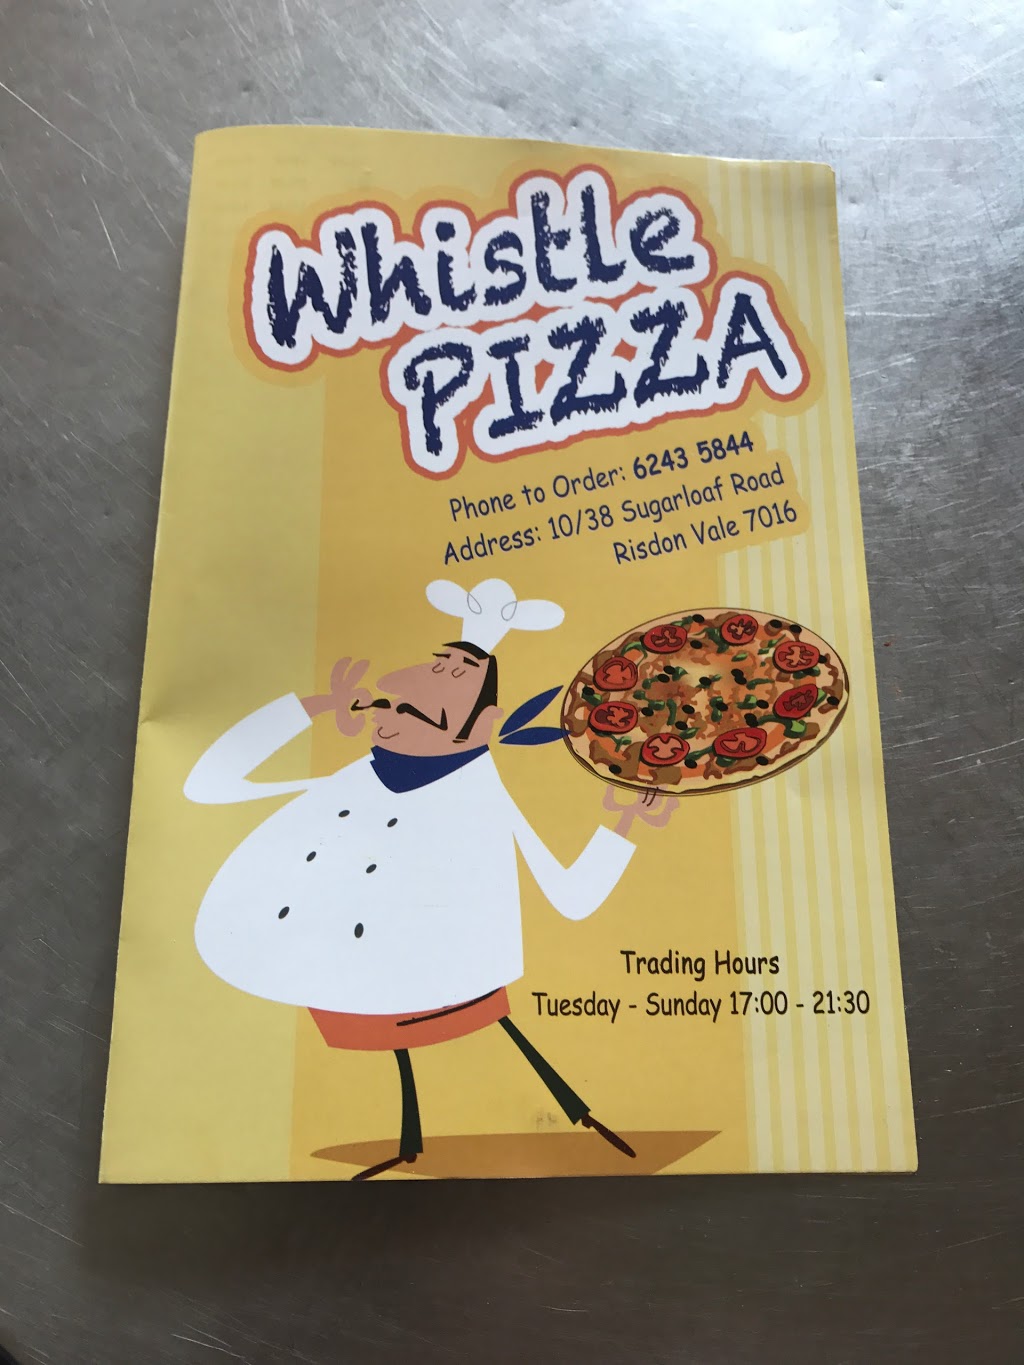 Whistle pizza | Australia, Tasmania, Risdon Vale, Shop1038 Sugarloaf Road邮政编码: 7016 | Phone: (03) 6243 5844